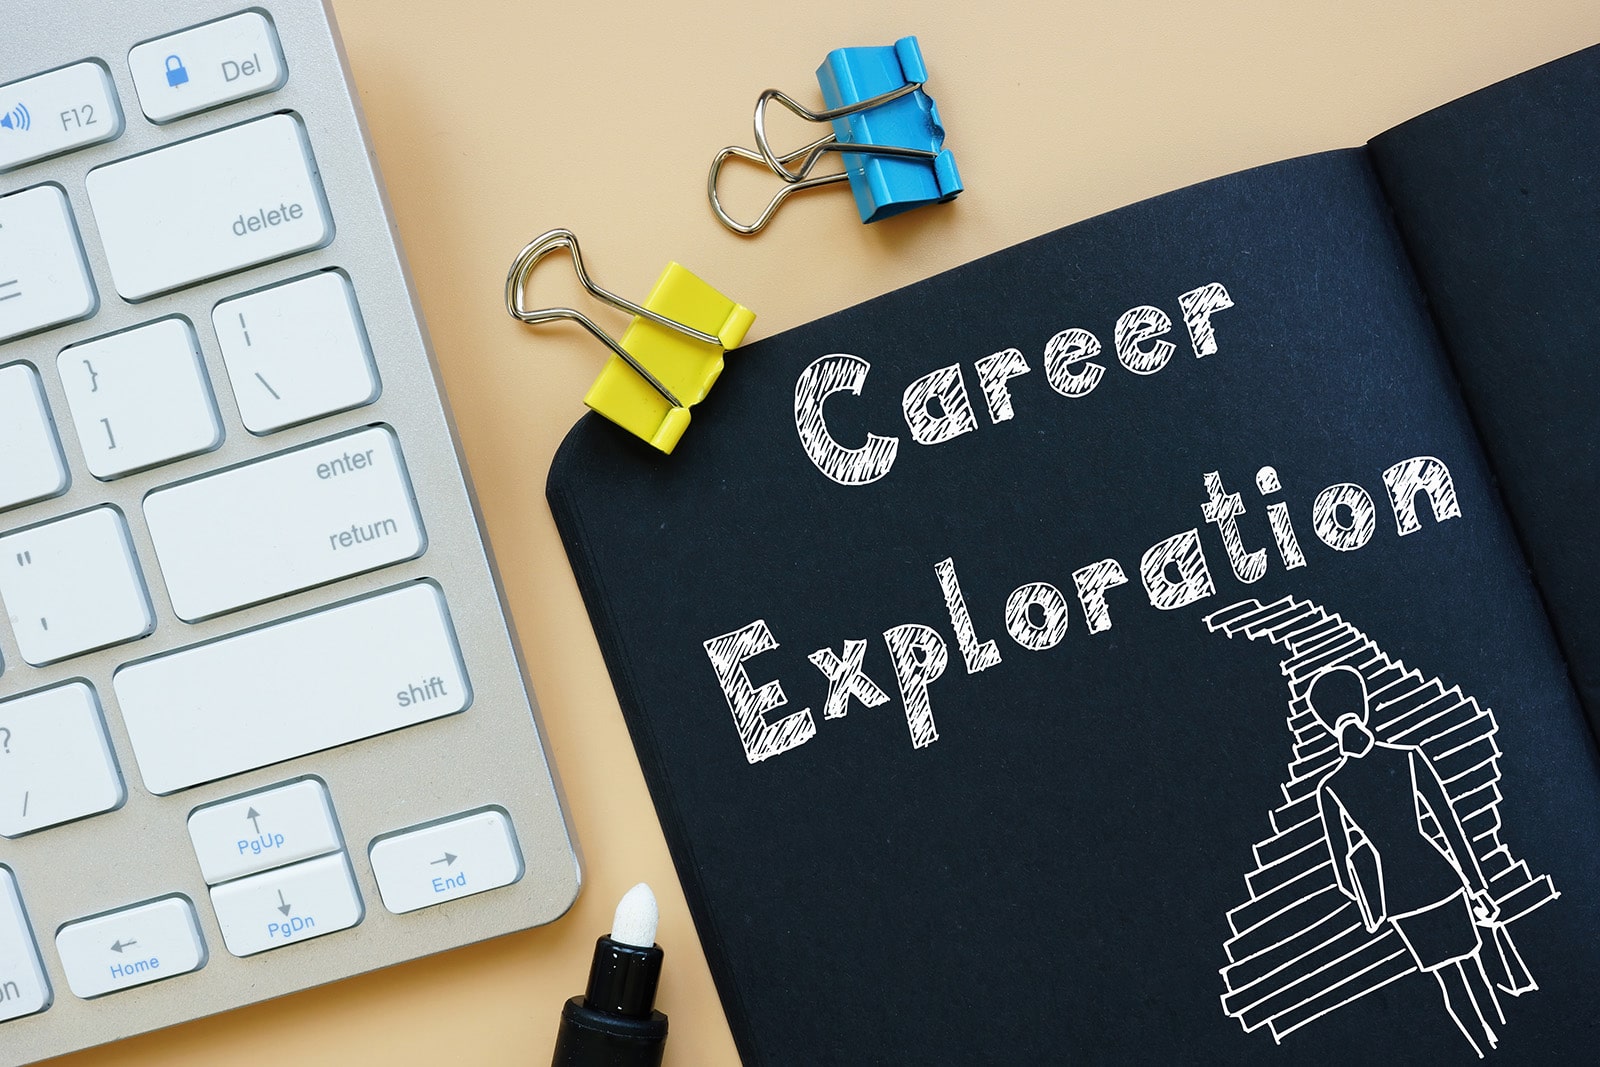 Career Exploration